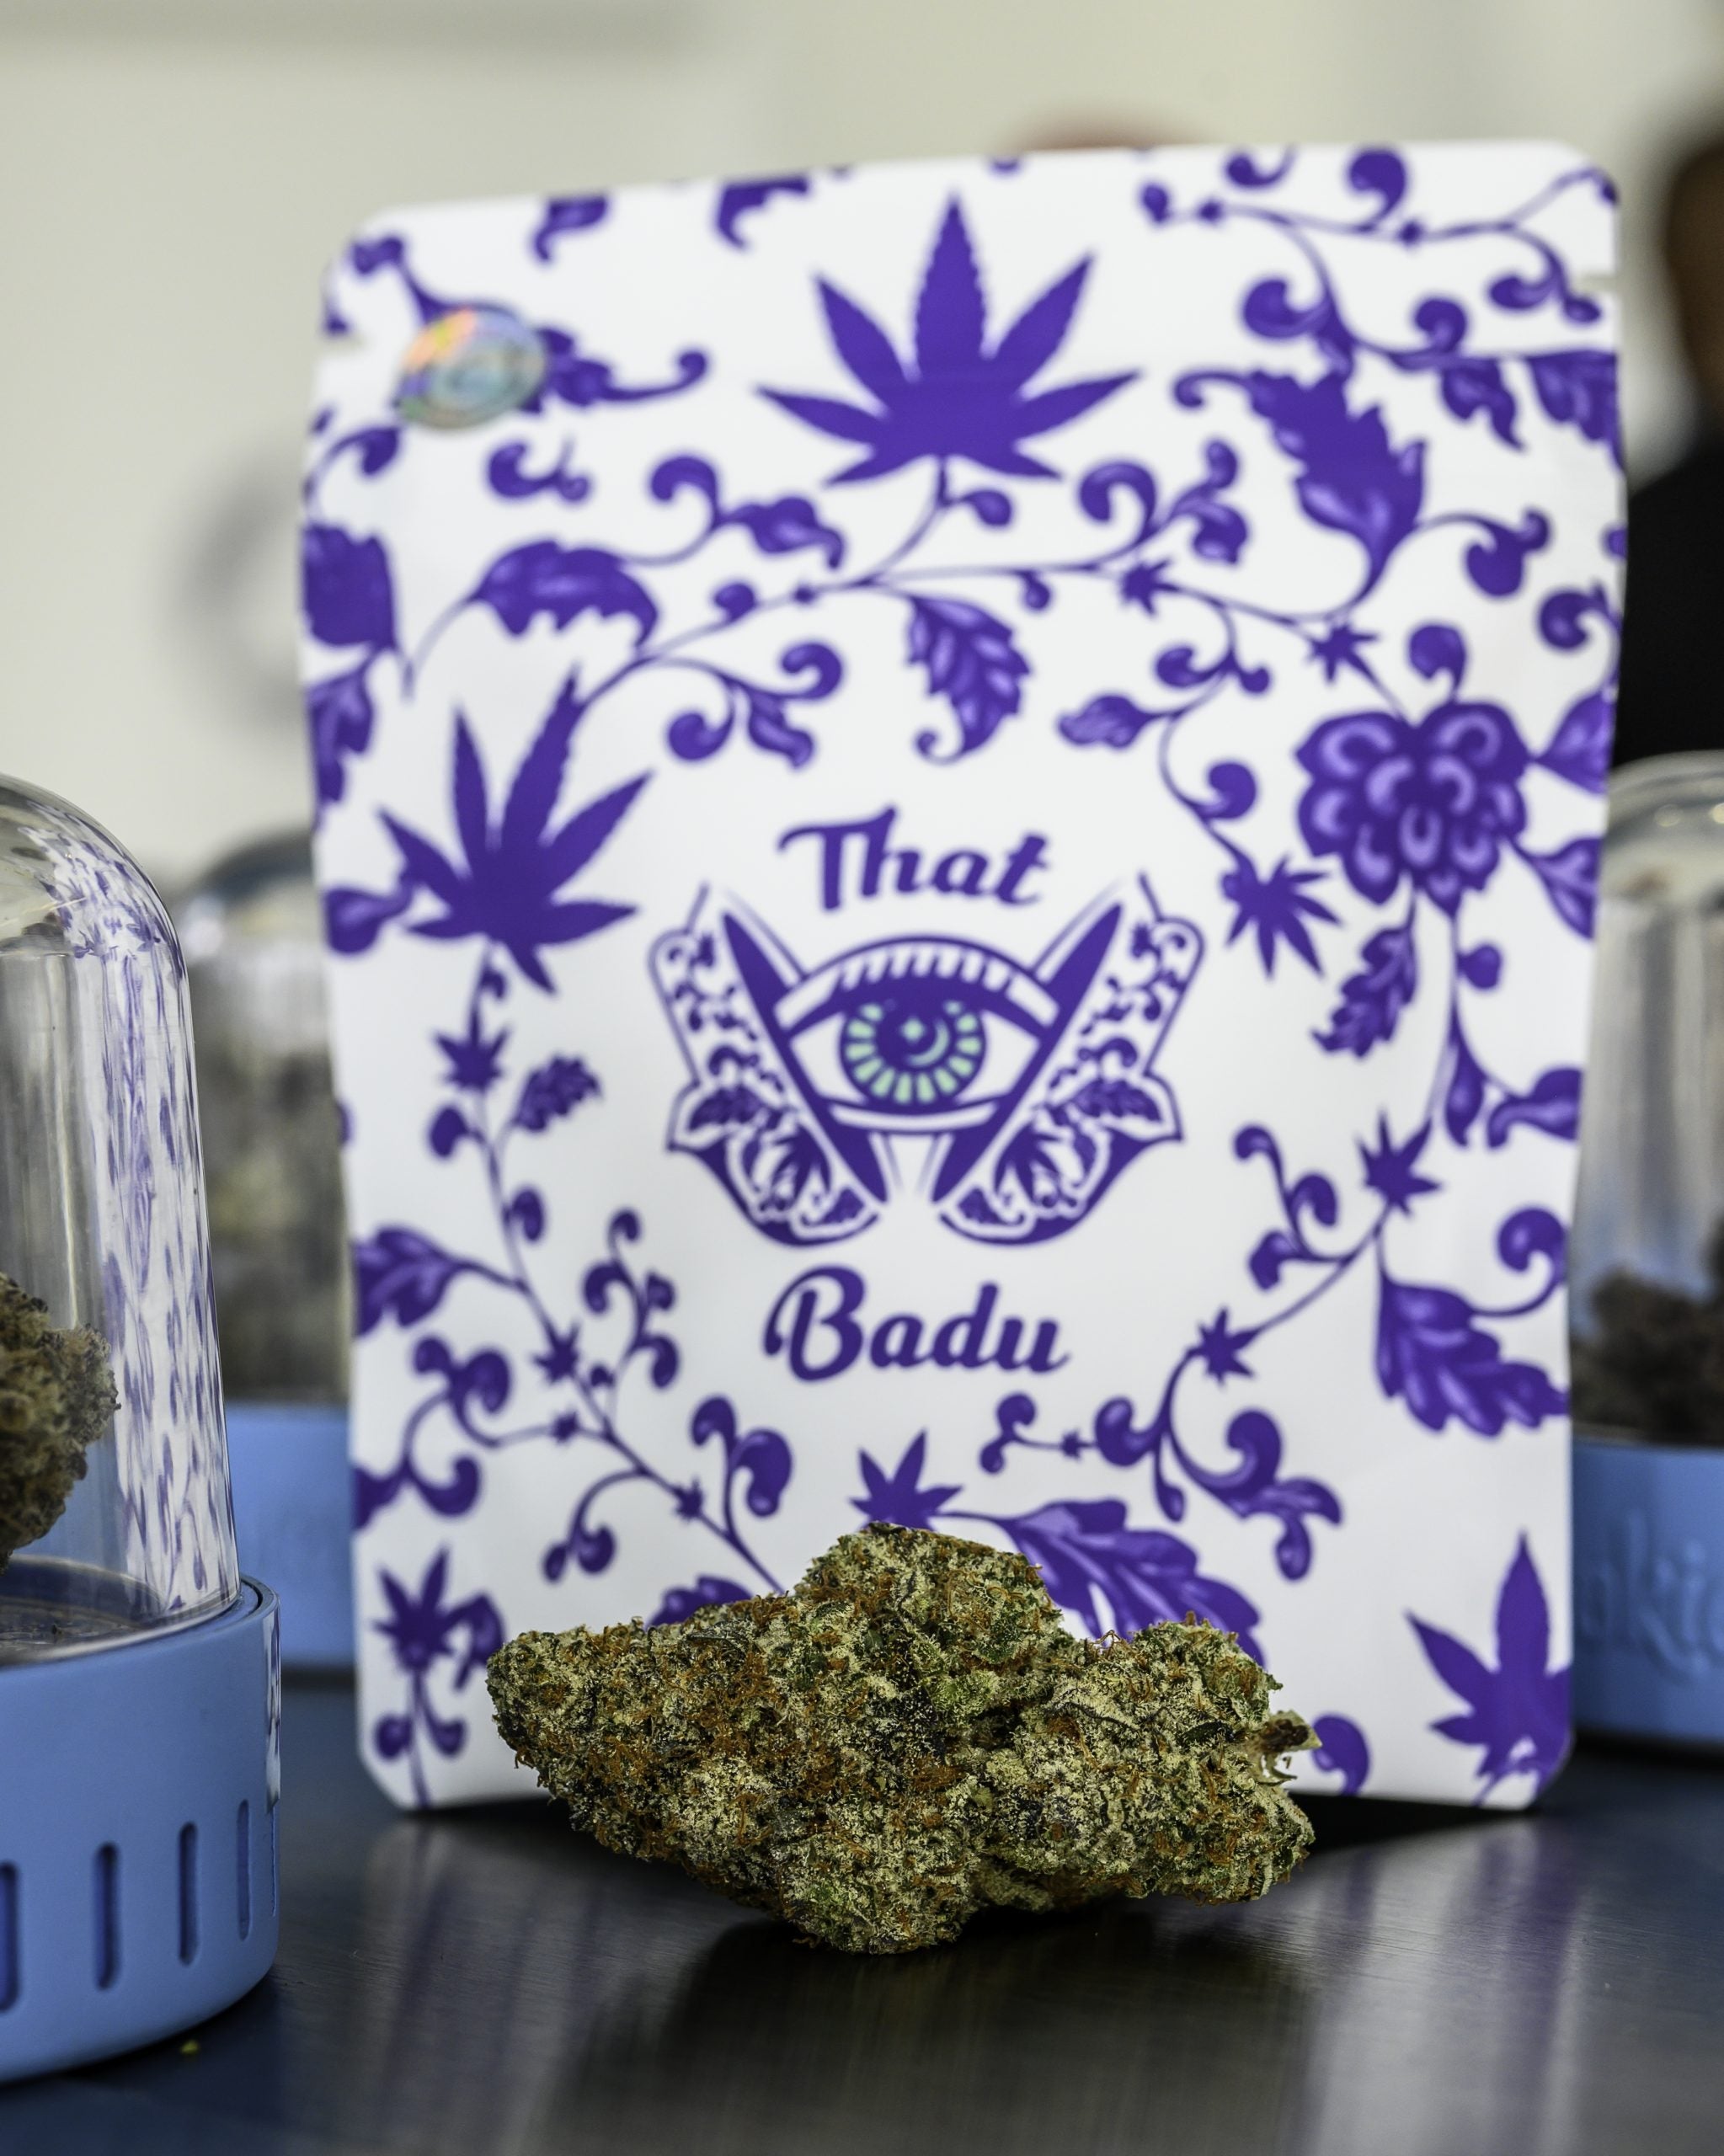 Erykah Badu Talks Cannabis Line 'That Badu' With Cookies